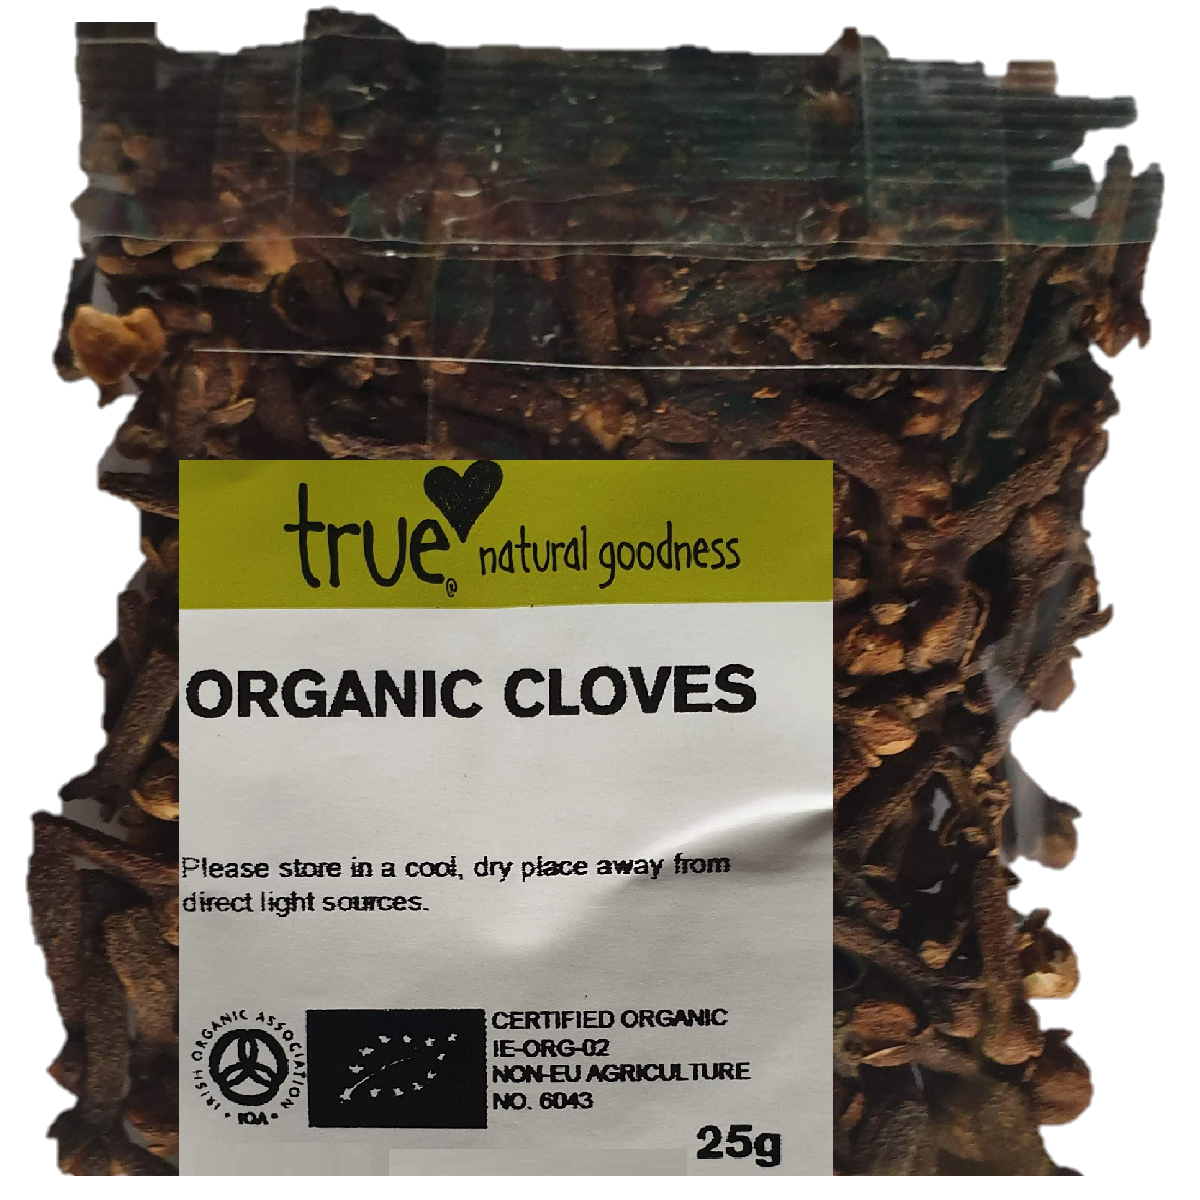 True Natural Goodness Organic Cloves 25g